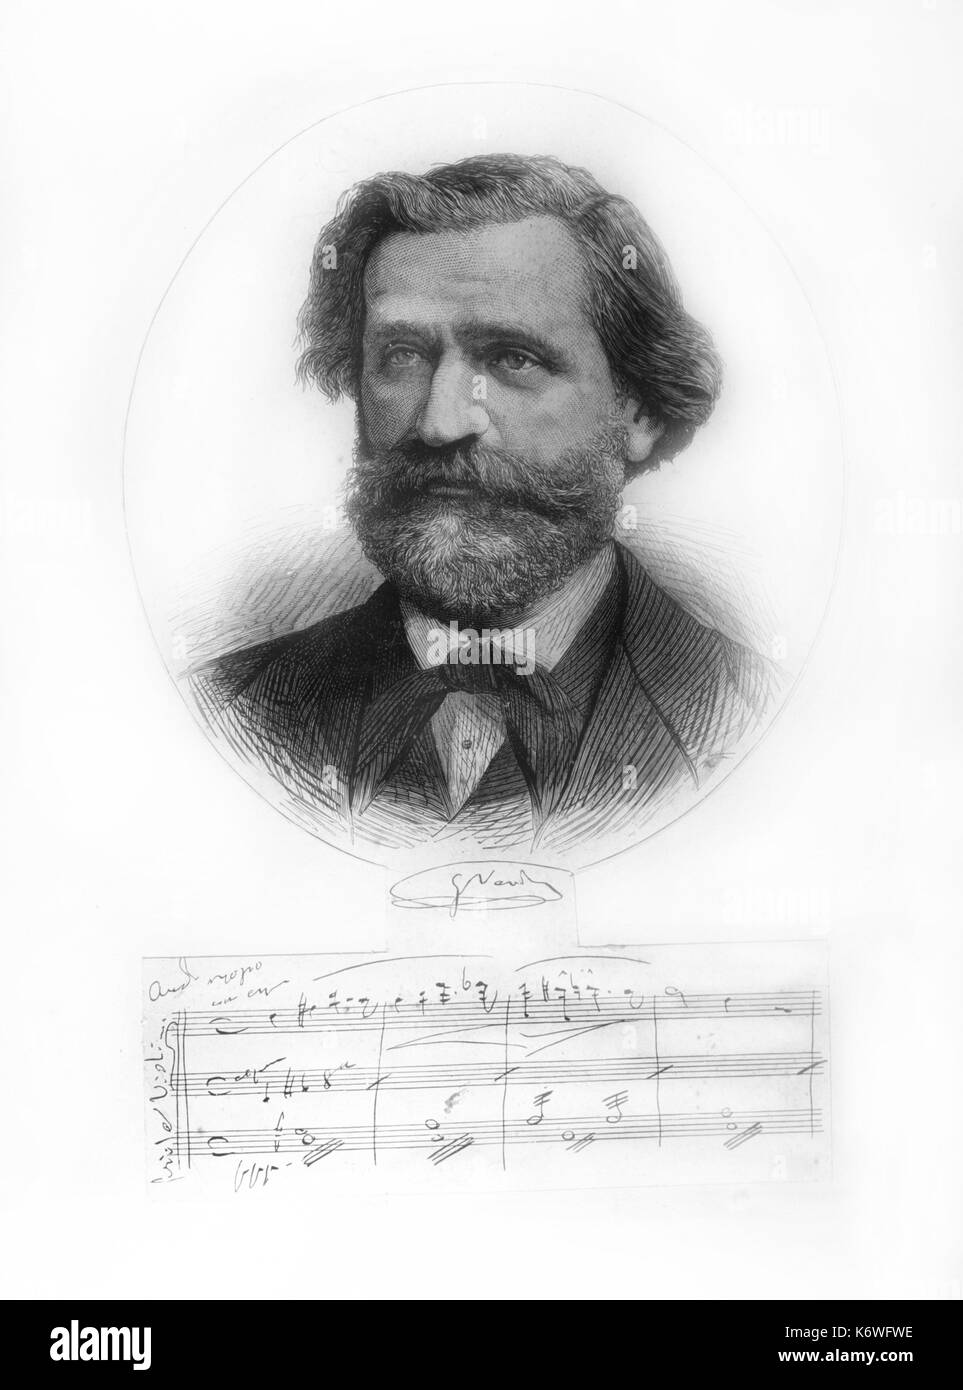 Giuseppe Verdi. Portrait & autograph ms lithograph Italian composer,  9 or 10 October 1813 - 27 January 1901. Stock Photo